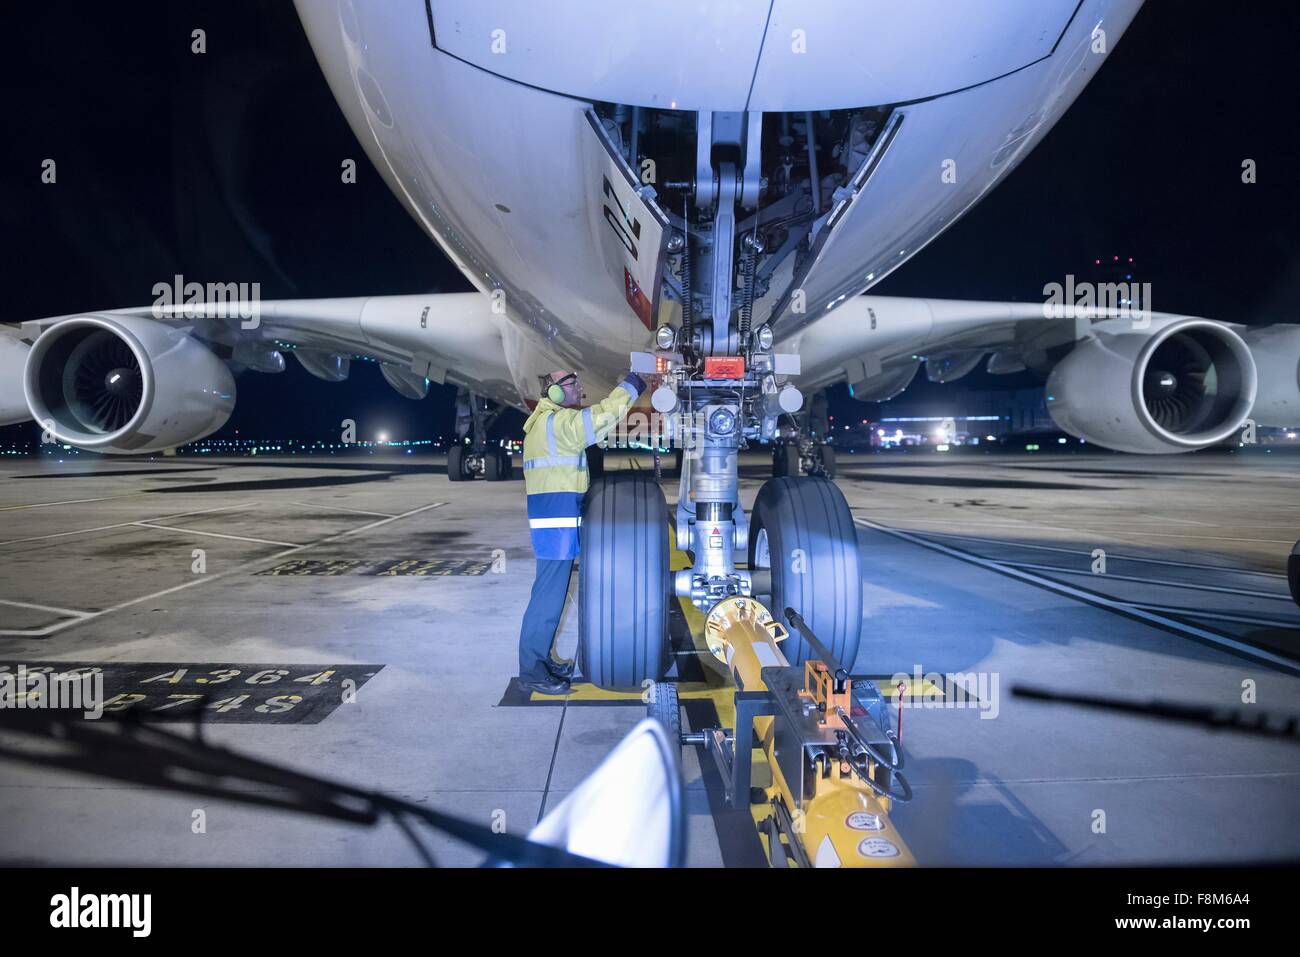 Chief engineer inspecting A380 aircraft on runway at airport at night Stock Photo